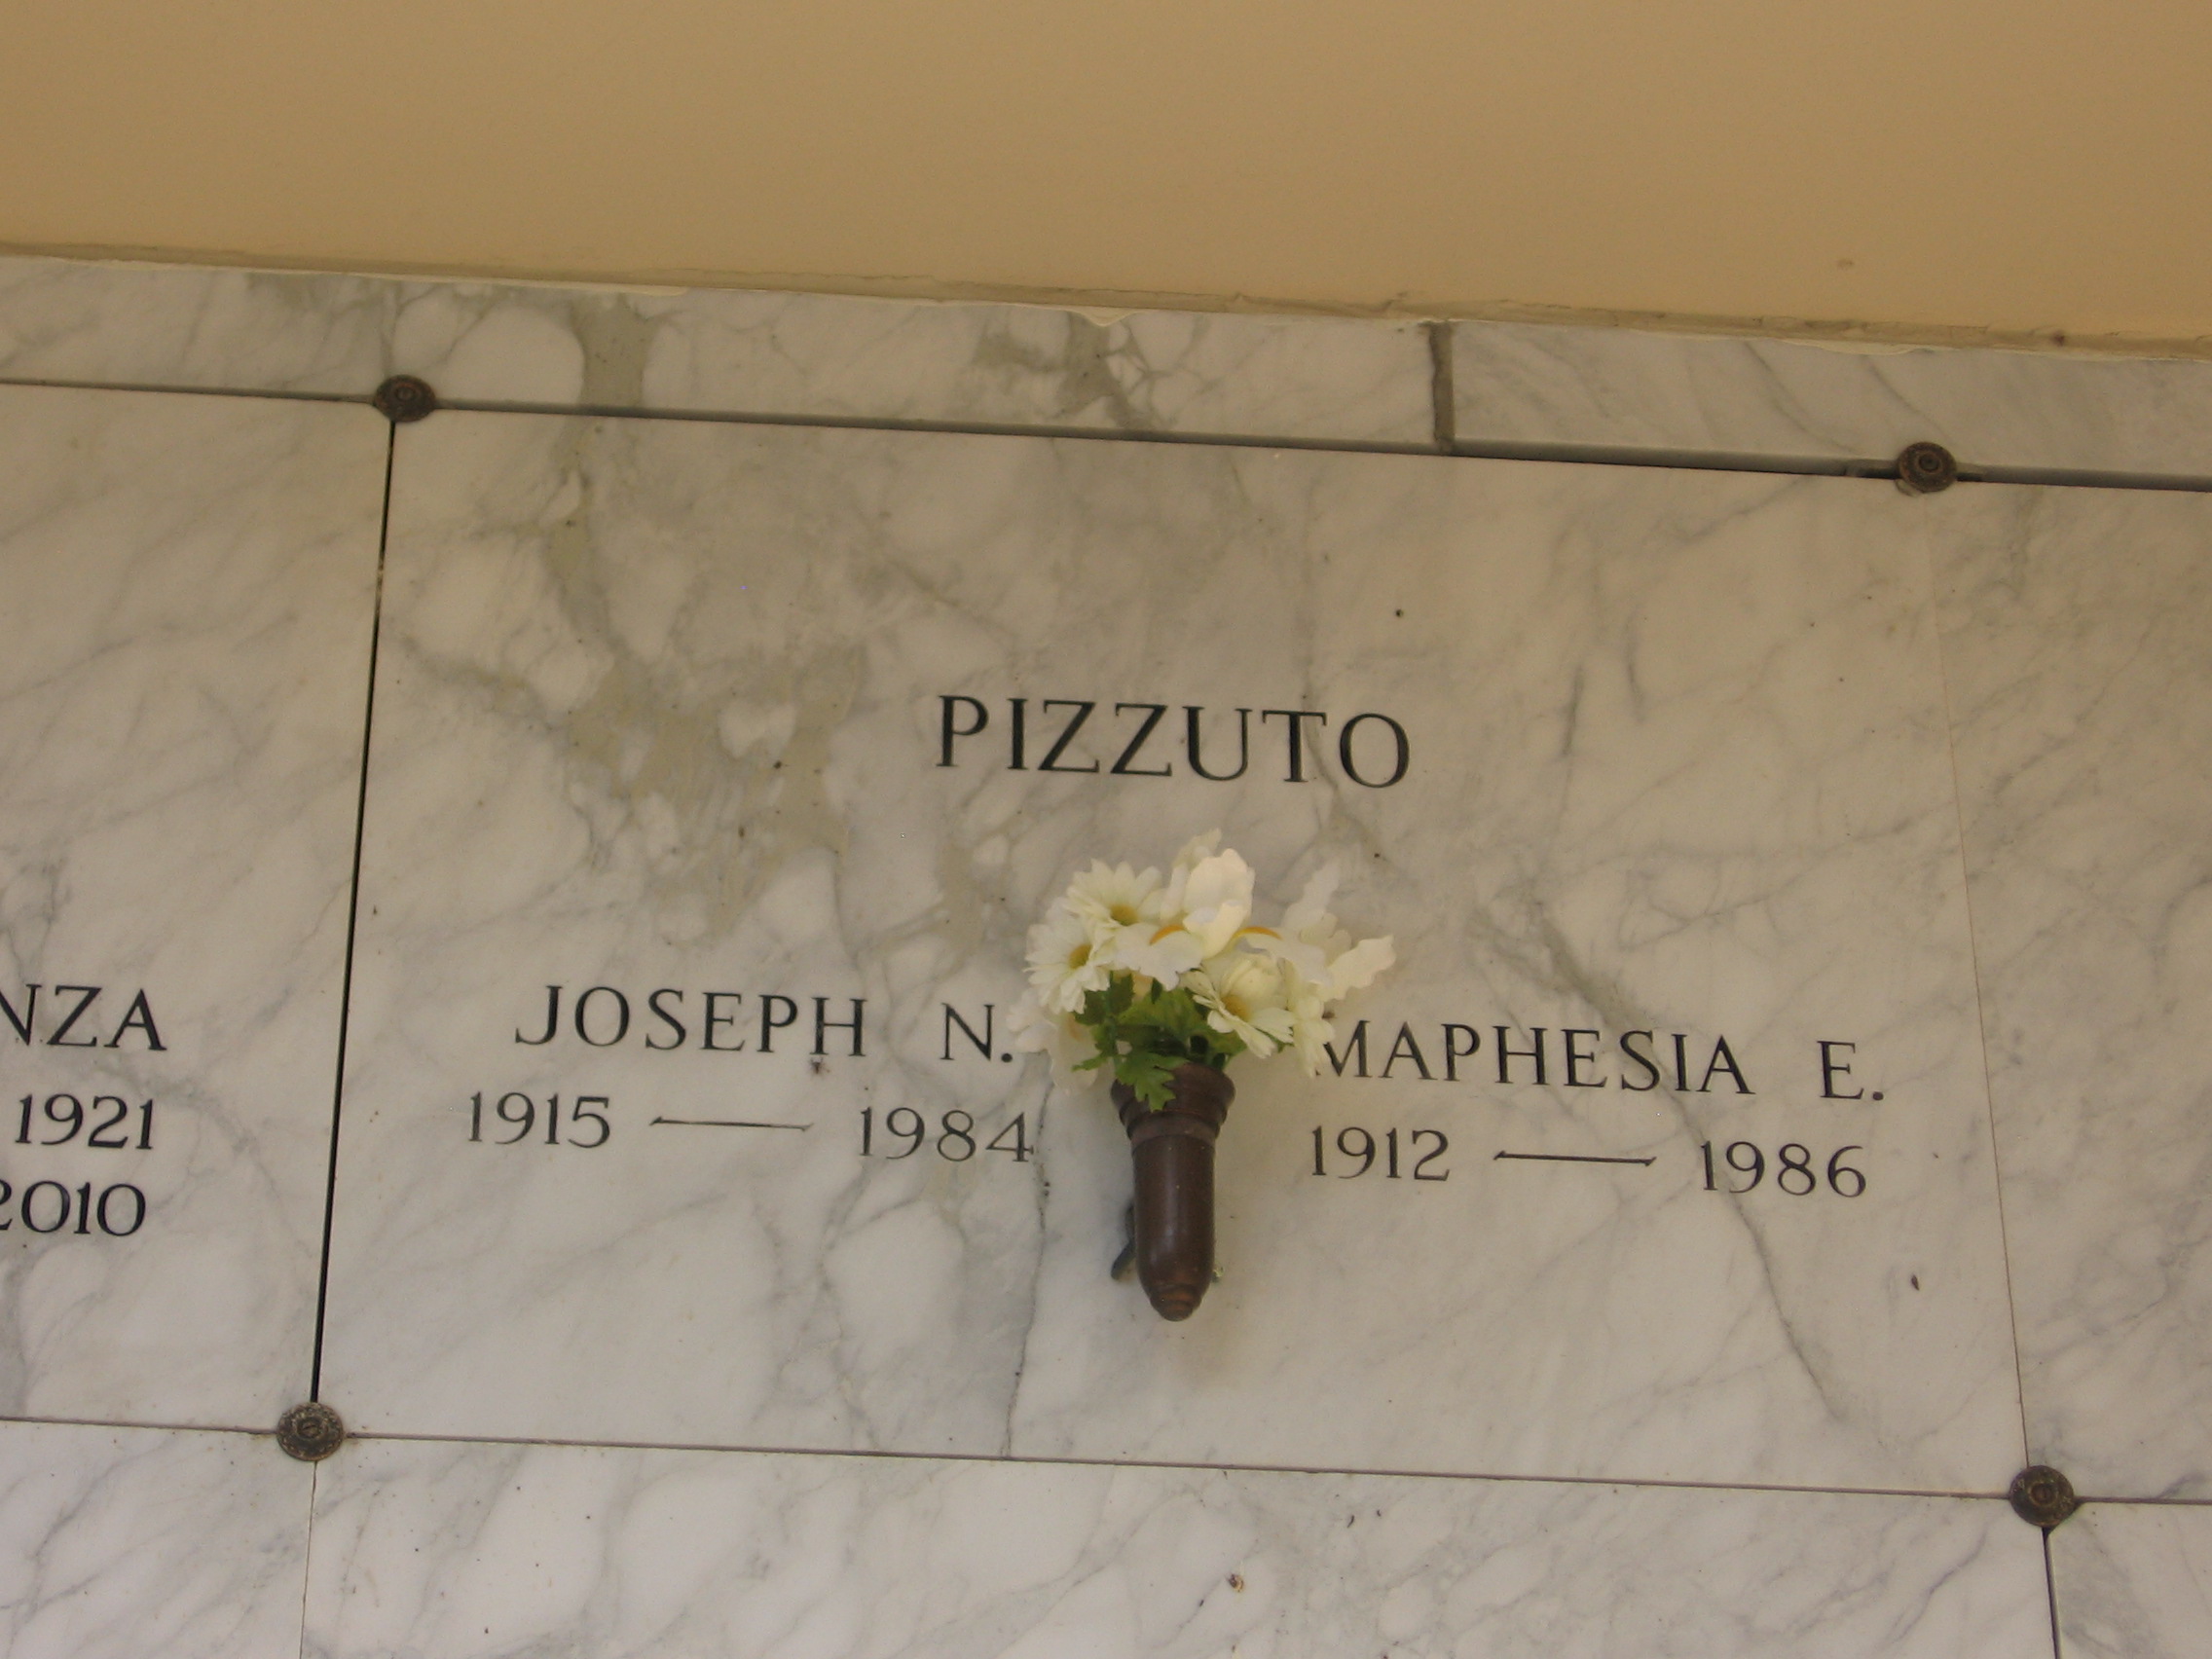 Joseph N Pizzuto